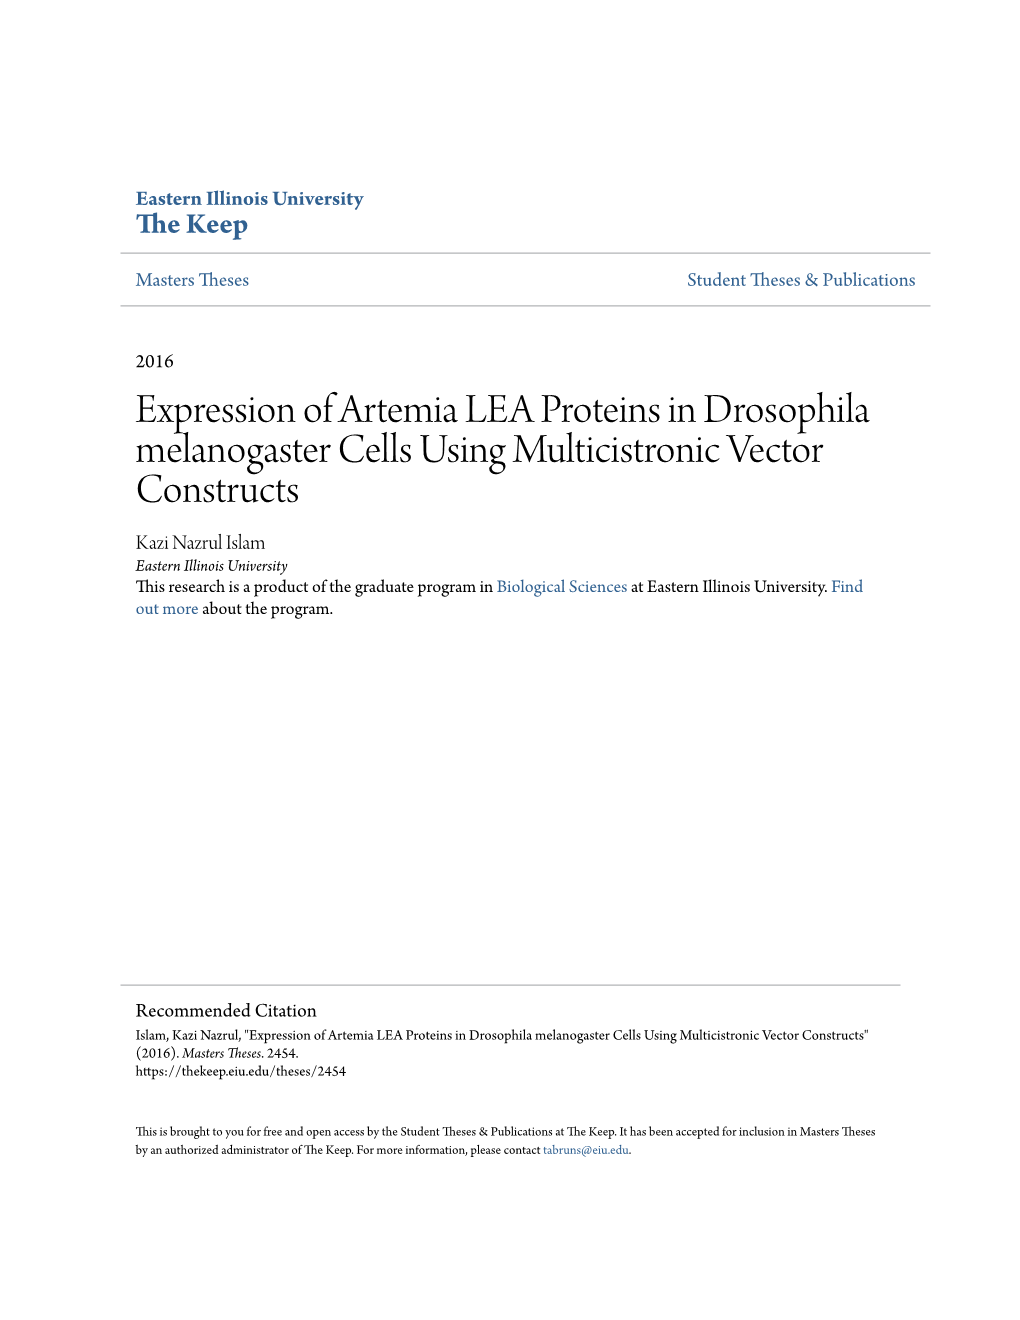 Expression of Artemia LEA Proteins in Drosophila Melanogaster Cells